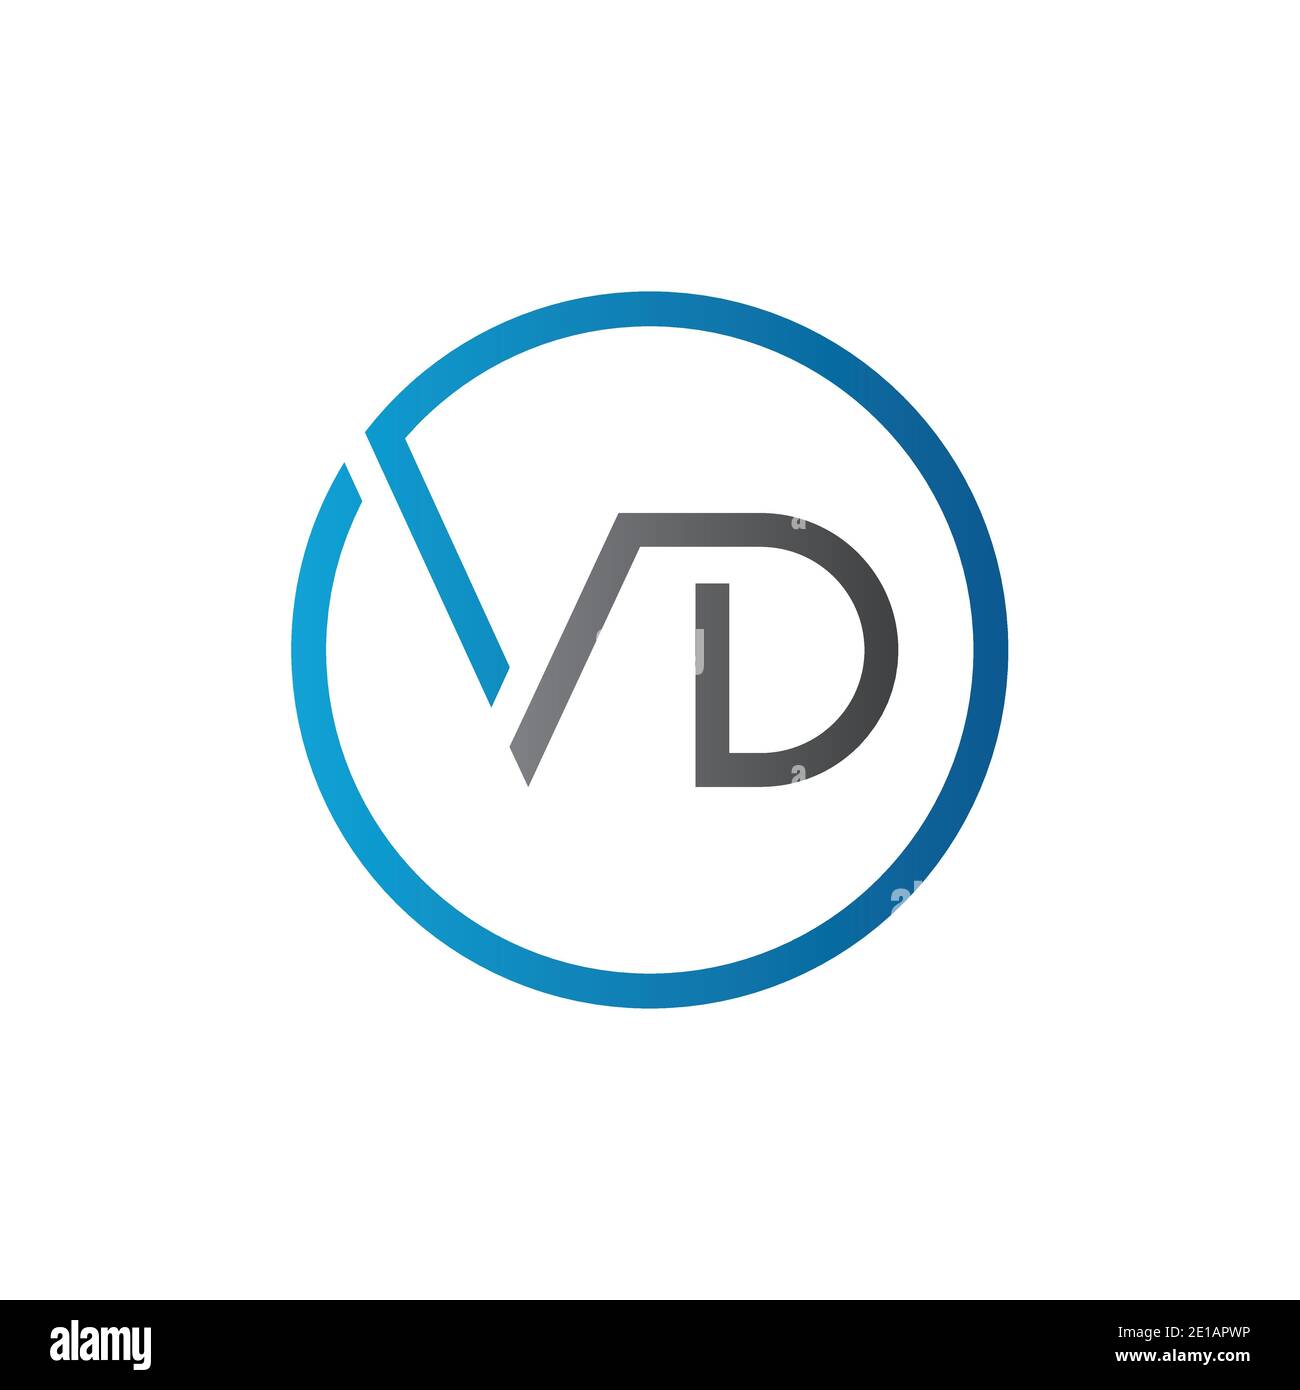 Initial Circle VD Letter Logo Creative Typography Vector Template. Creative Letter VD Logo Vector. Stock Vector